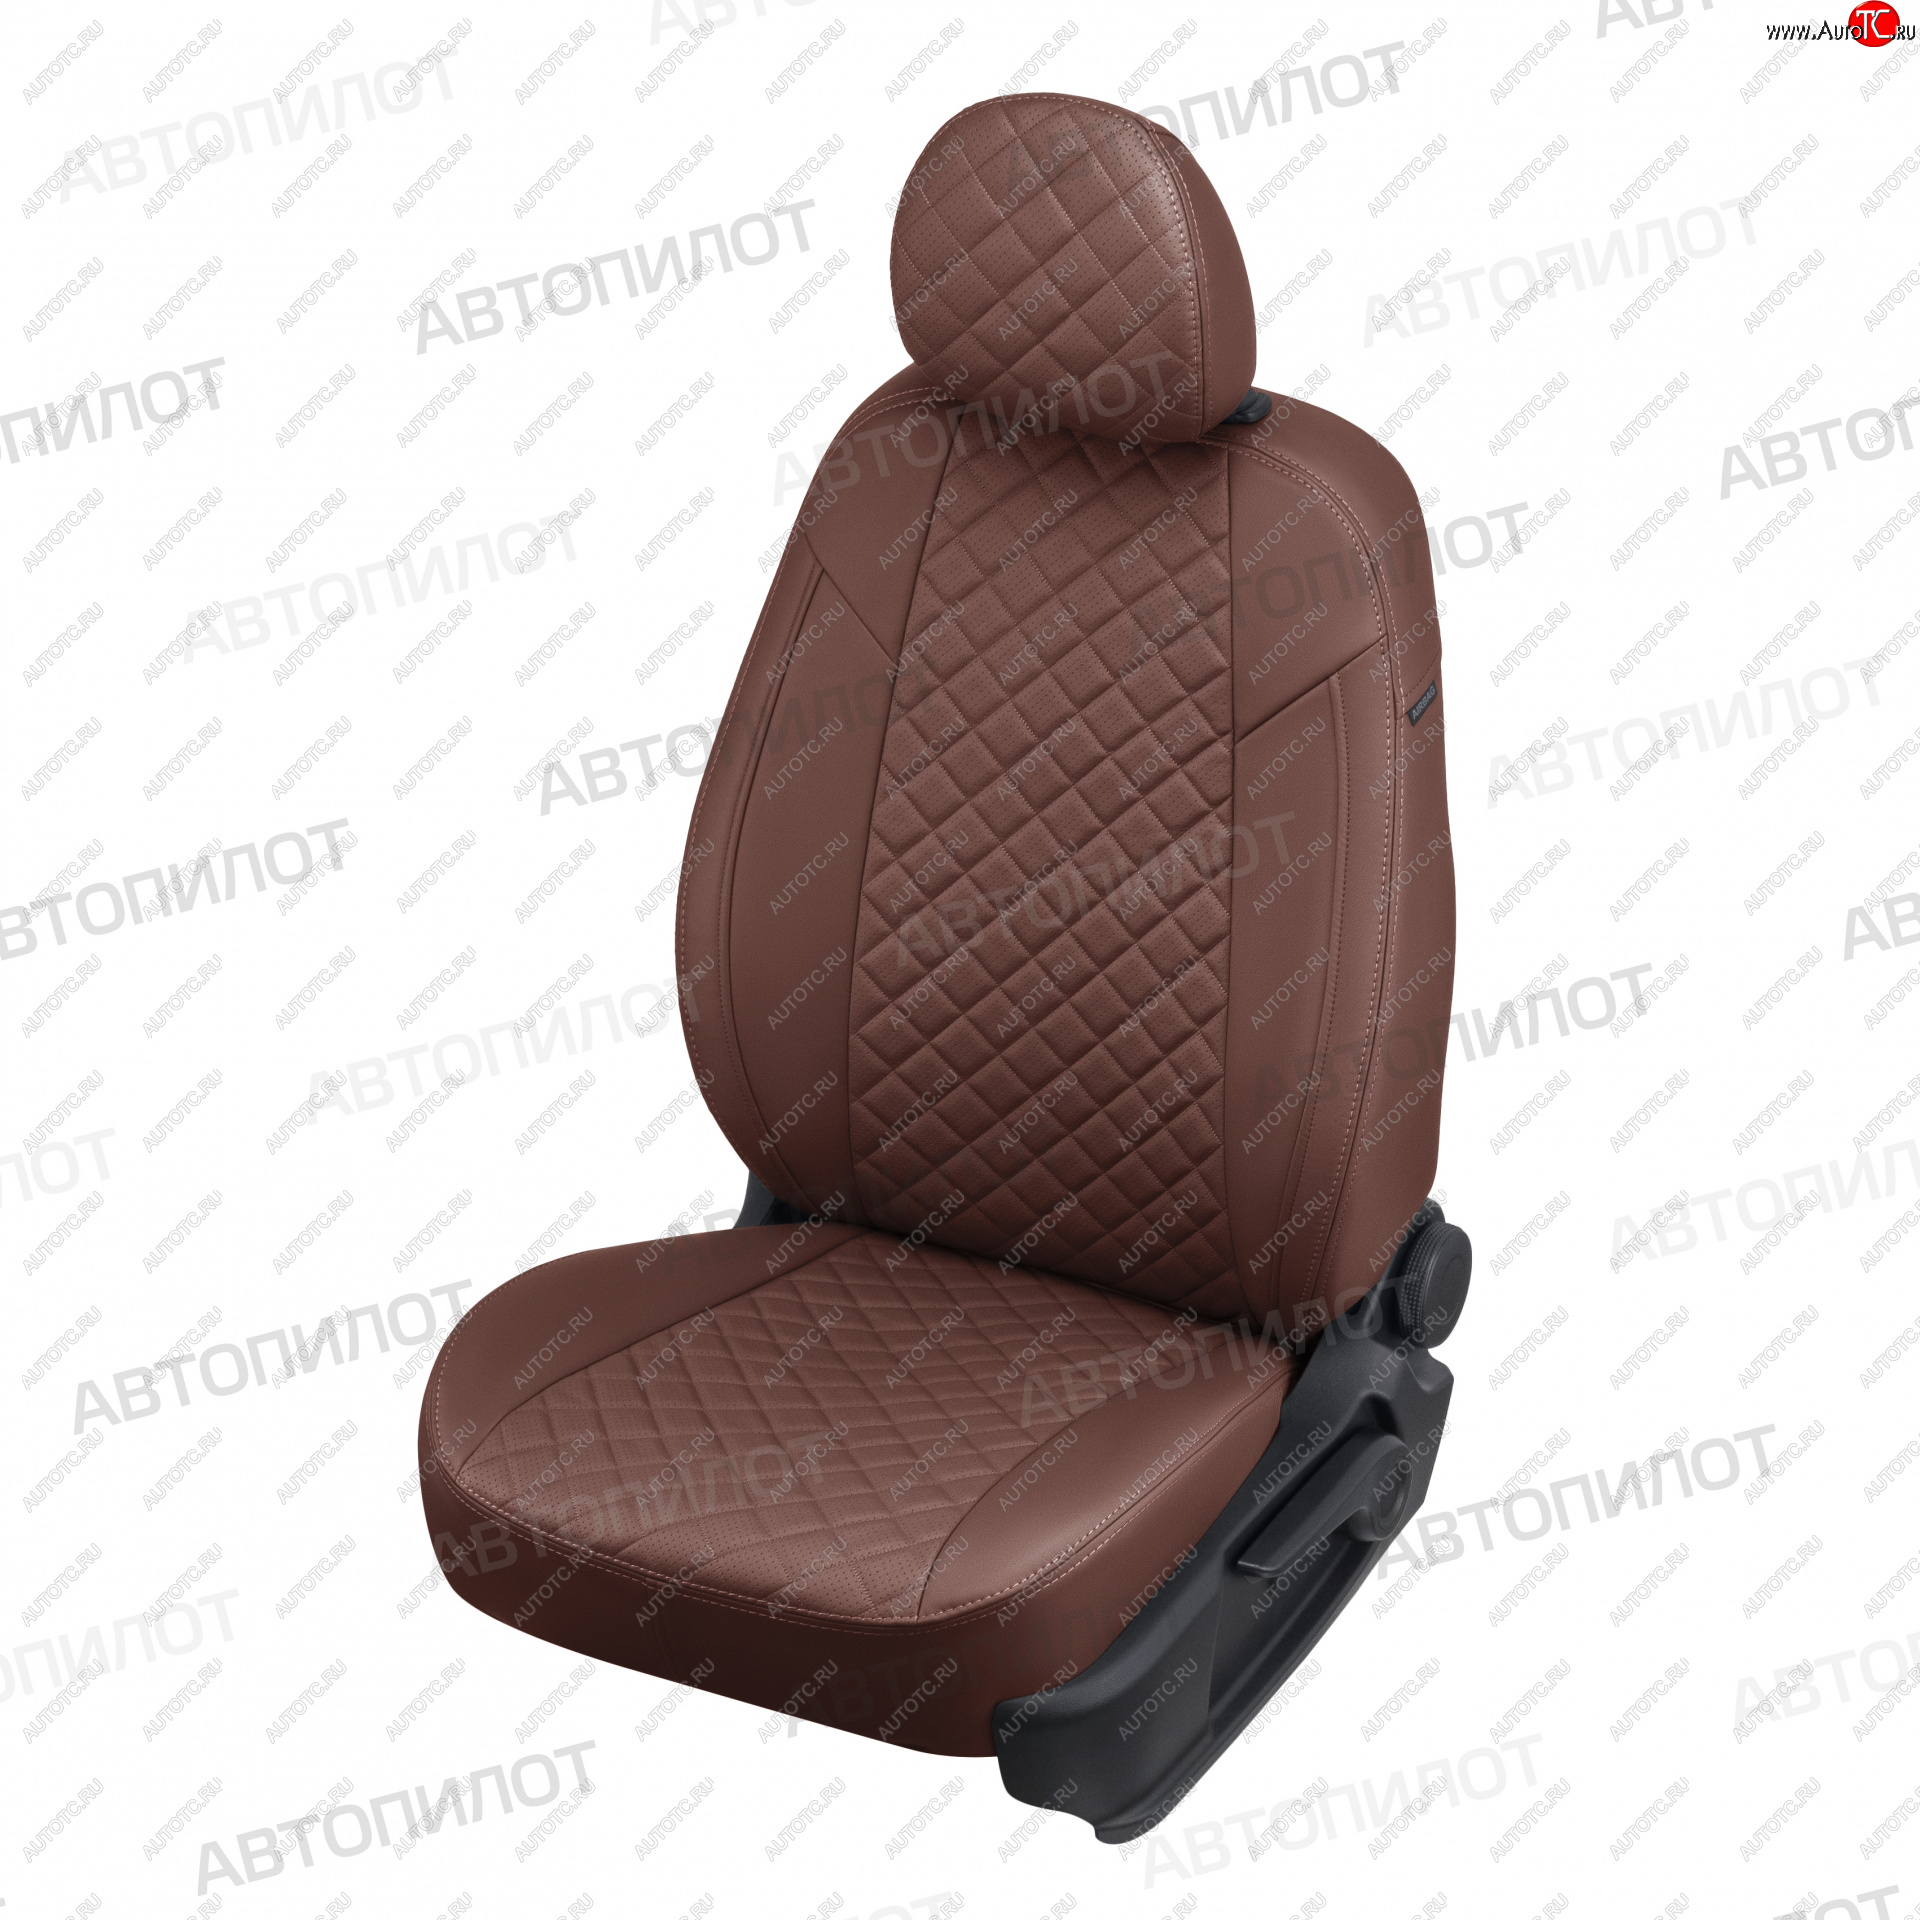 13 999 р. Чехлы сидений (5 мест, экокожа) Автопилот Ромб  Ford Galaxy  WGR (1995-2006) (темно-коричневый)